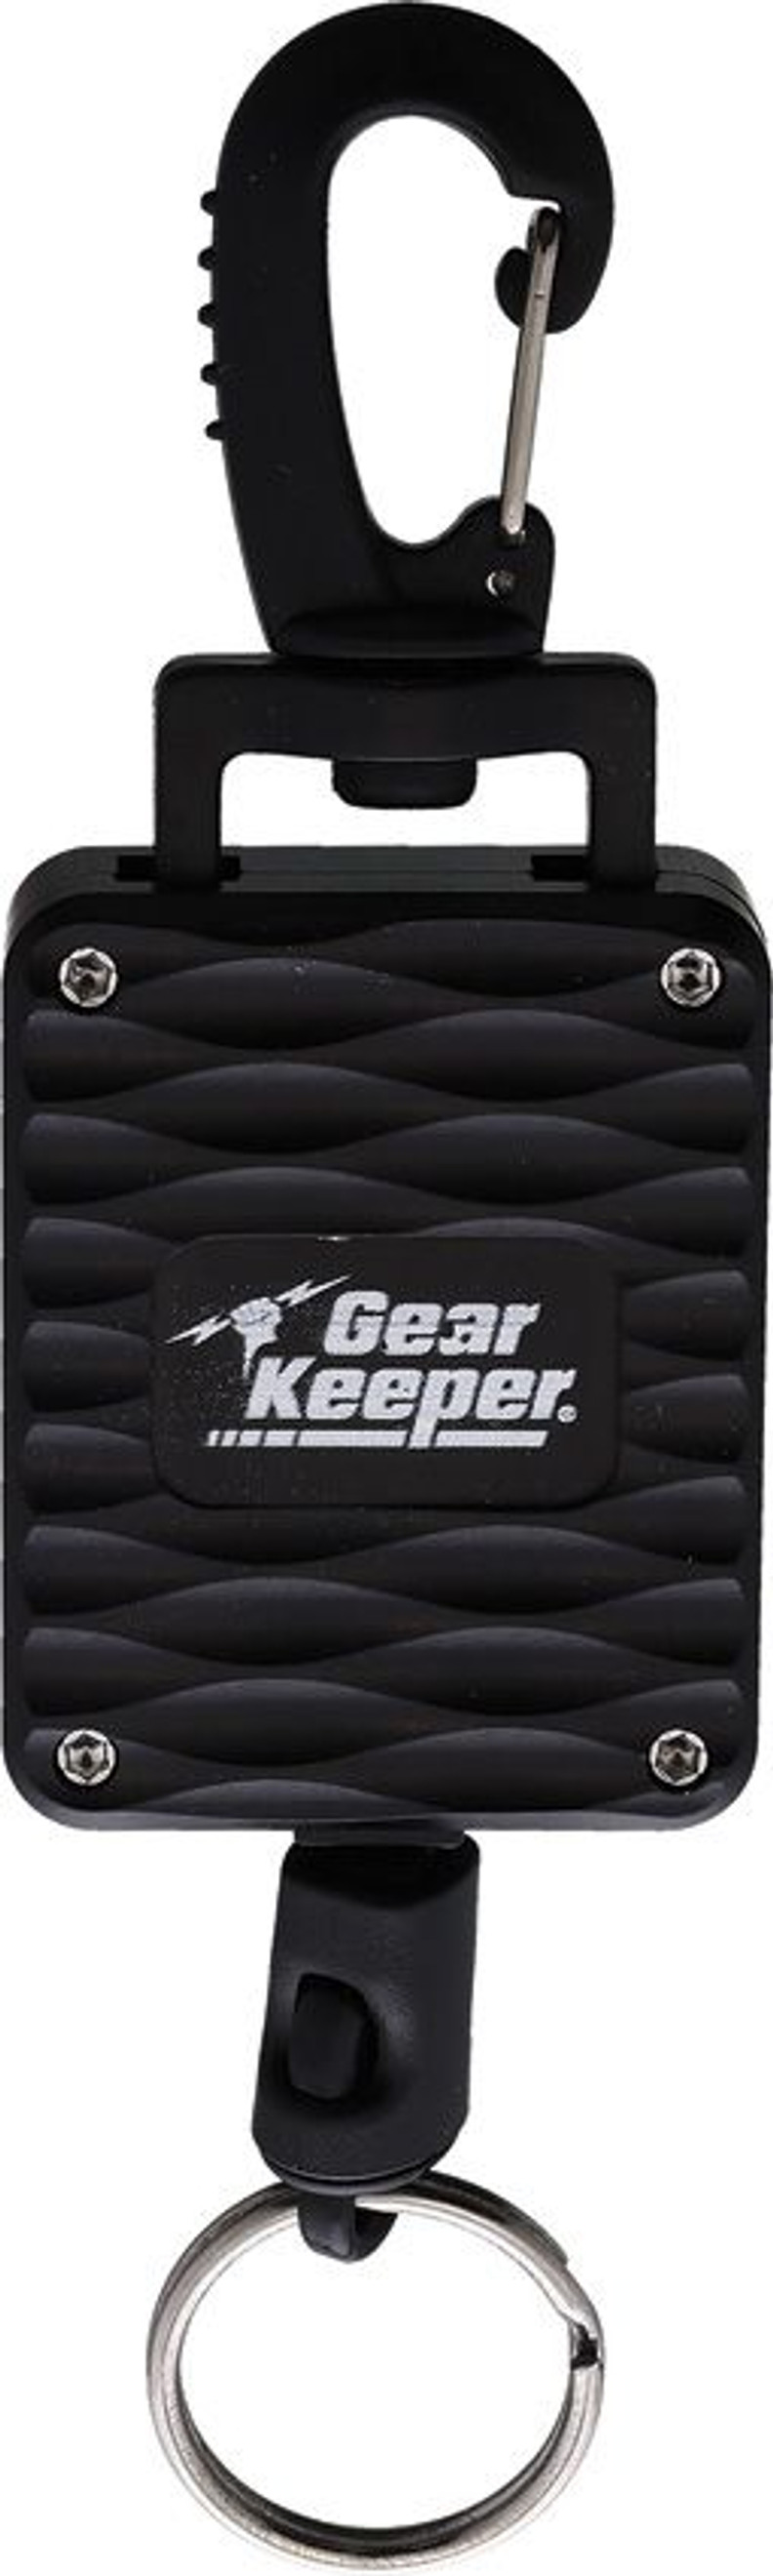 Gear Keeper High Force Retractor Aluminum - Black